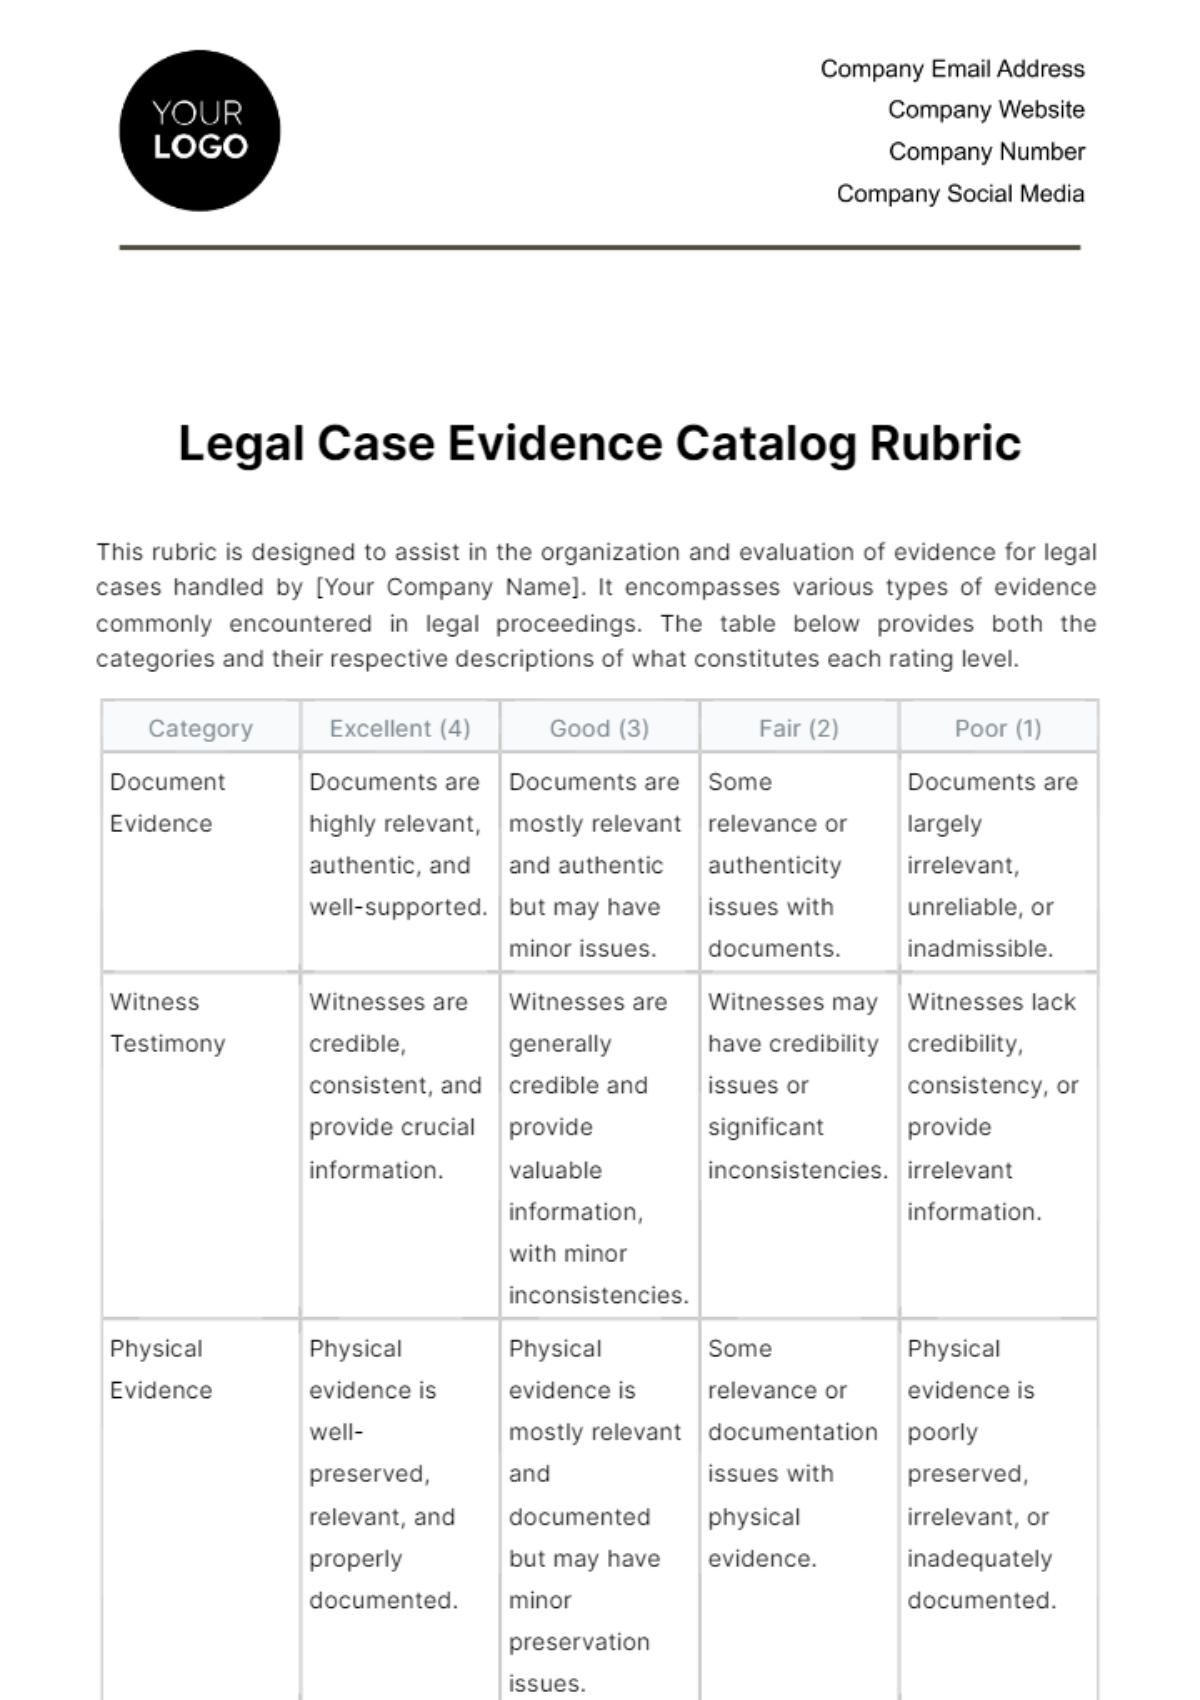 Legal Case Evidence Catalog Rubric Template